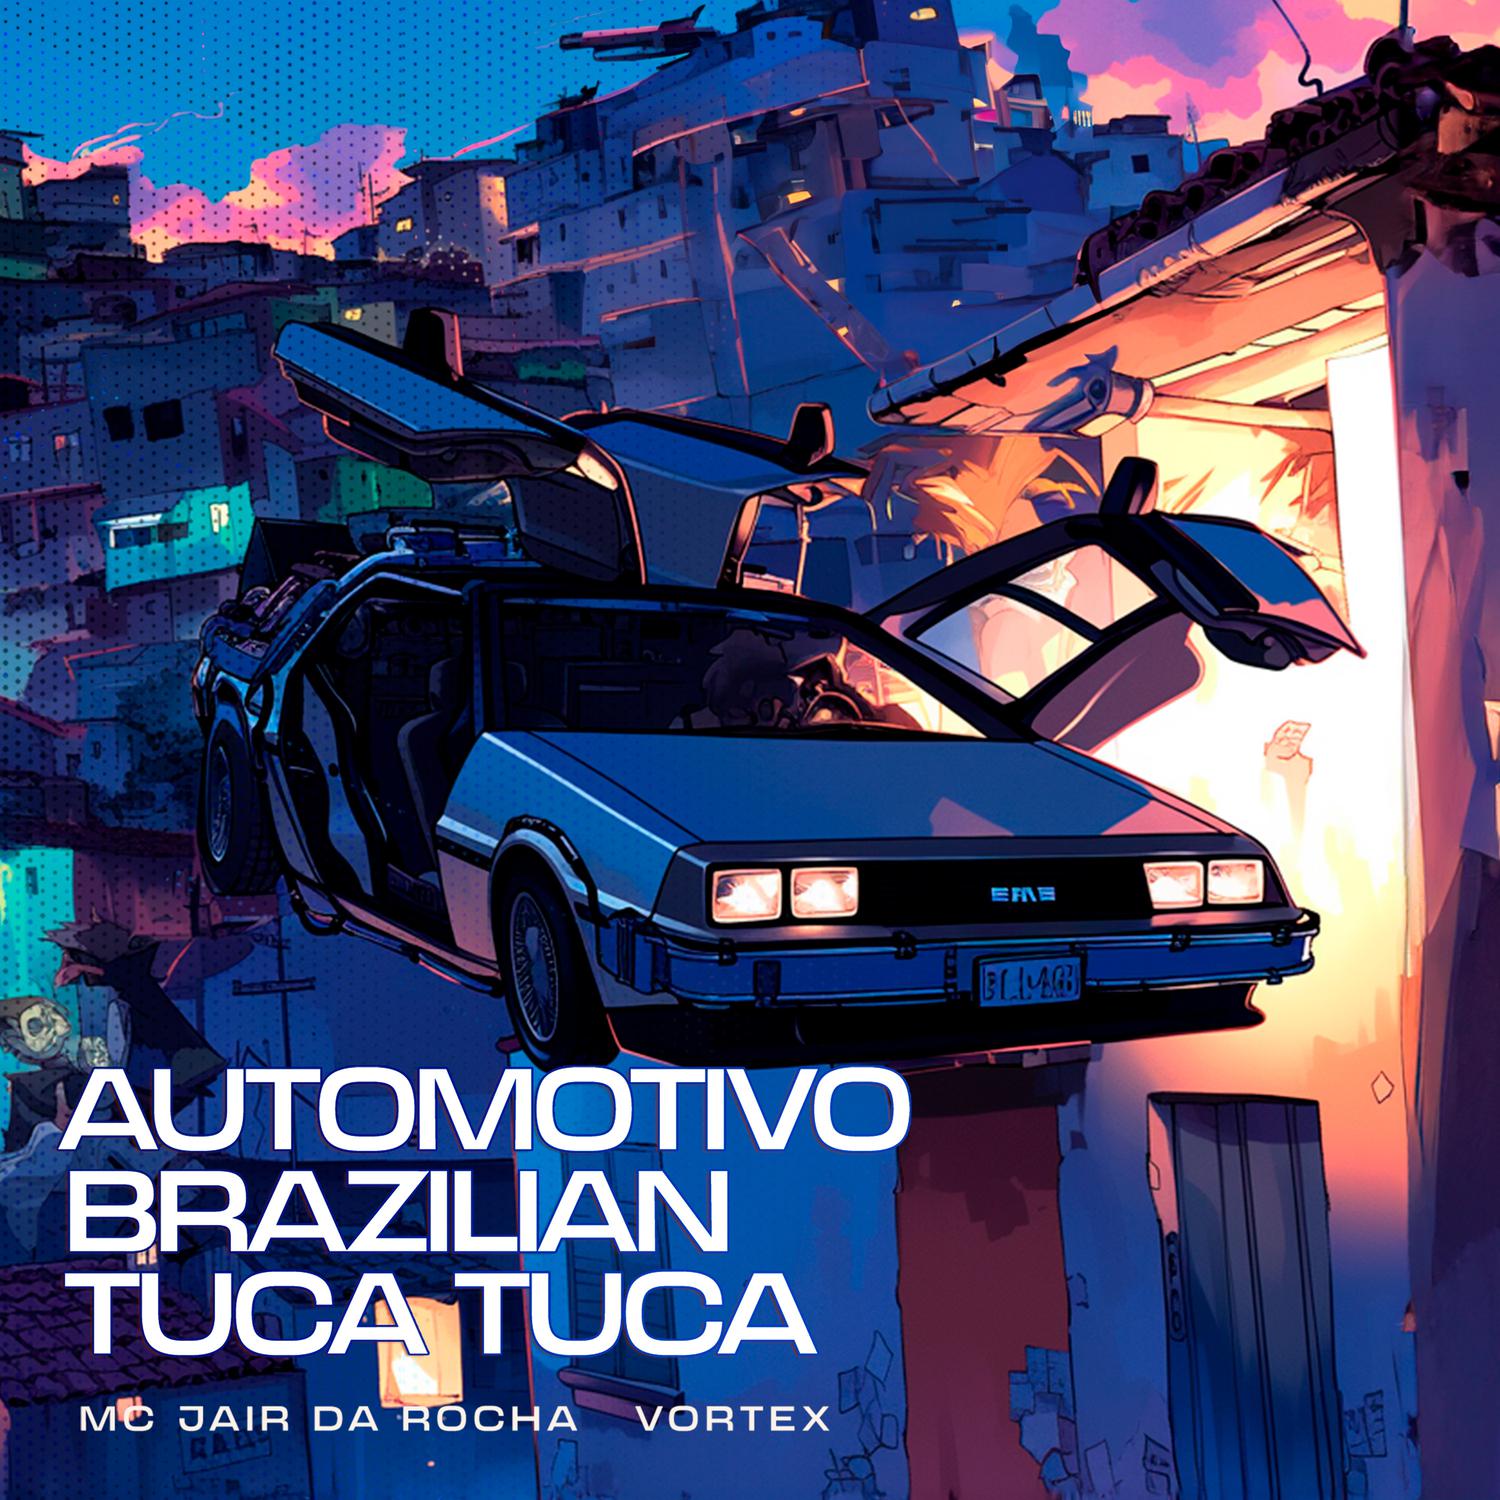 Vortex - AUTOMOTIVO BRAZILIAN TUCA TUCA (SPEED)